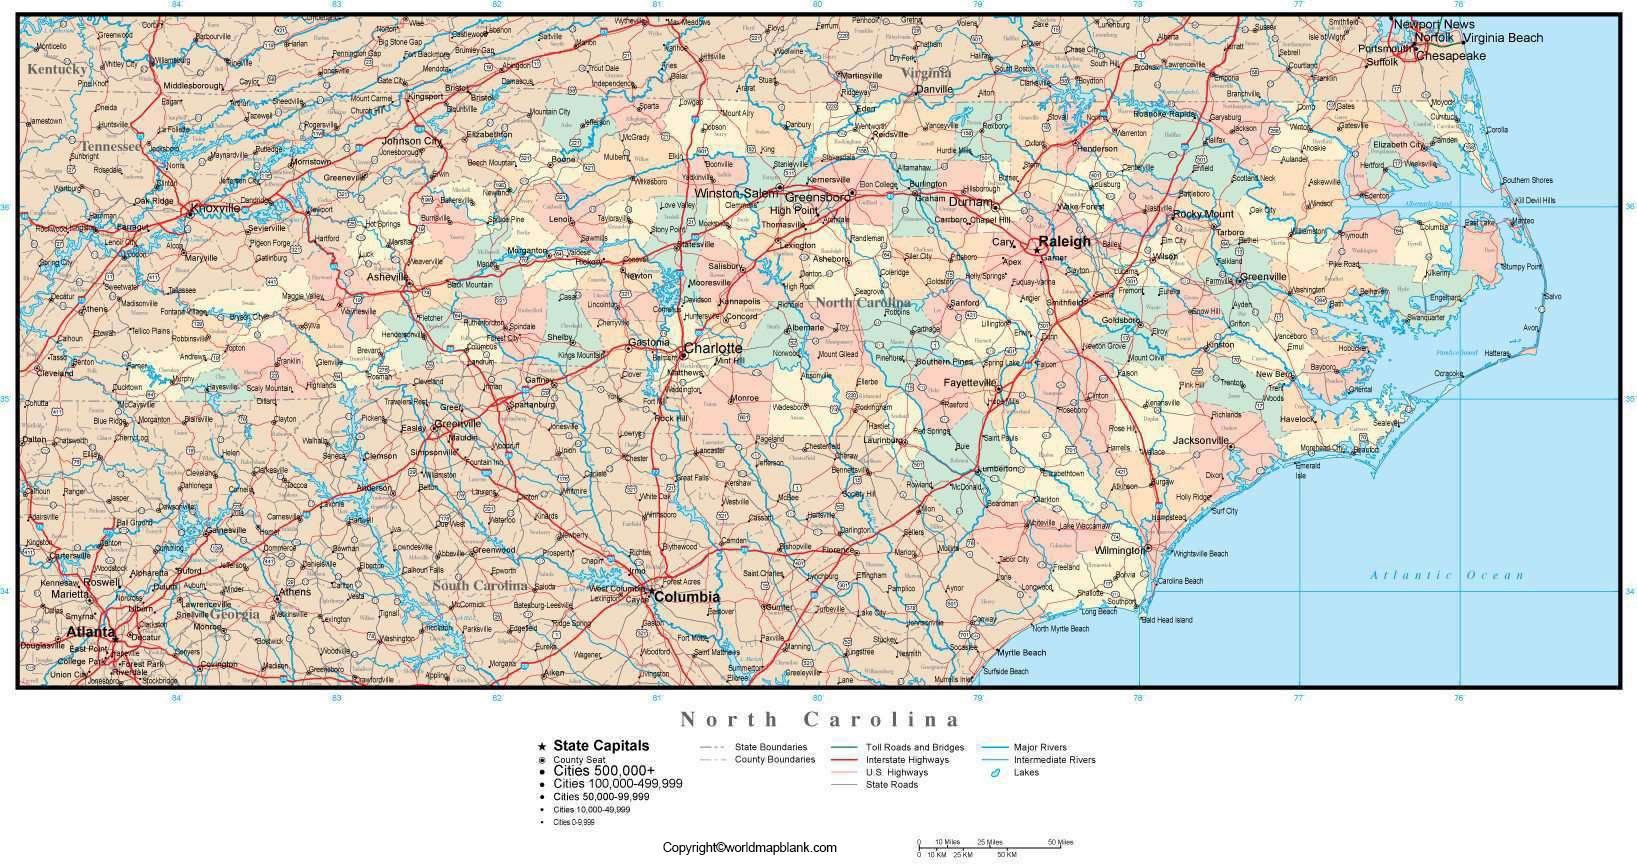 Labeled Map of North Carolina